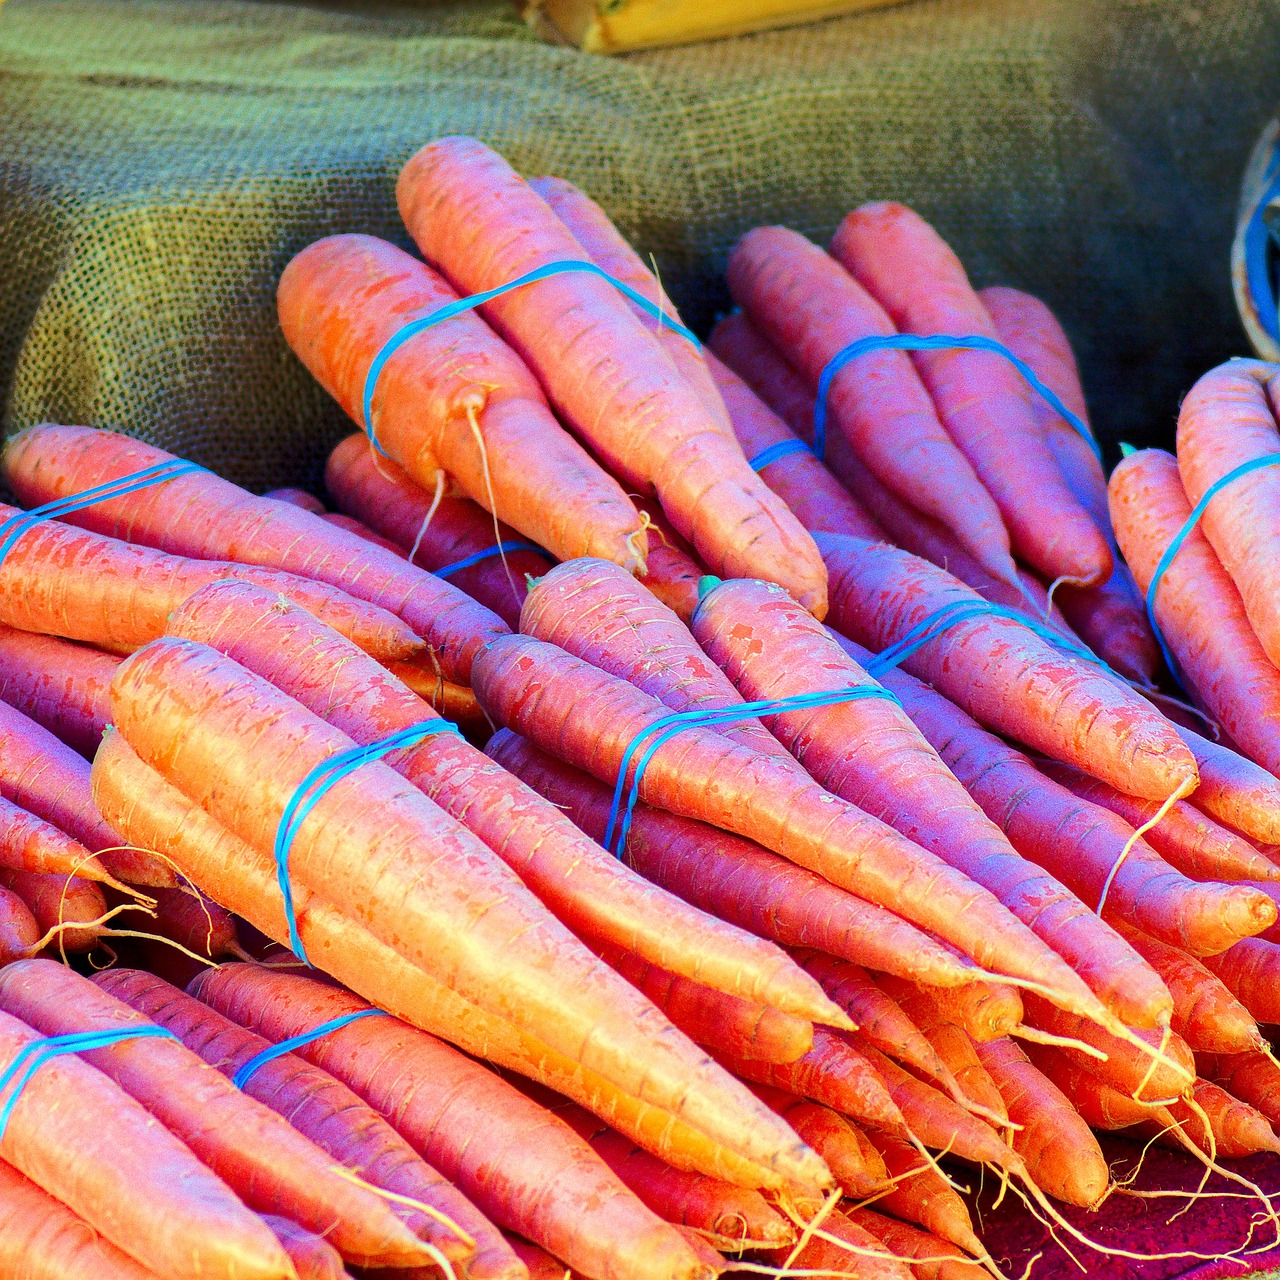 jackson farmers market carrots  carrots  farmers free photo